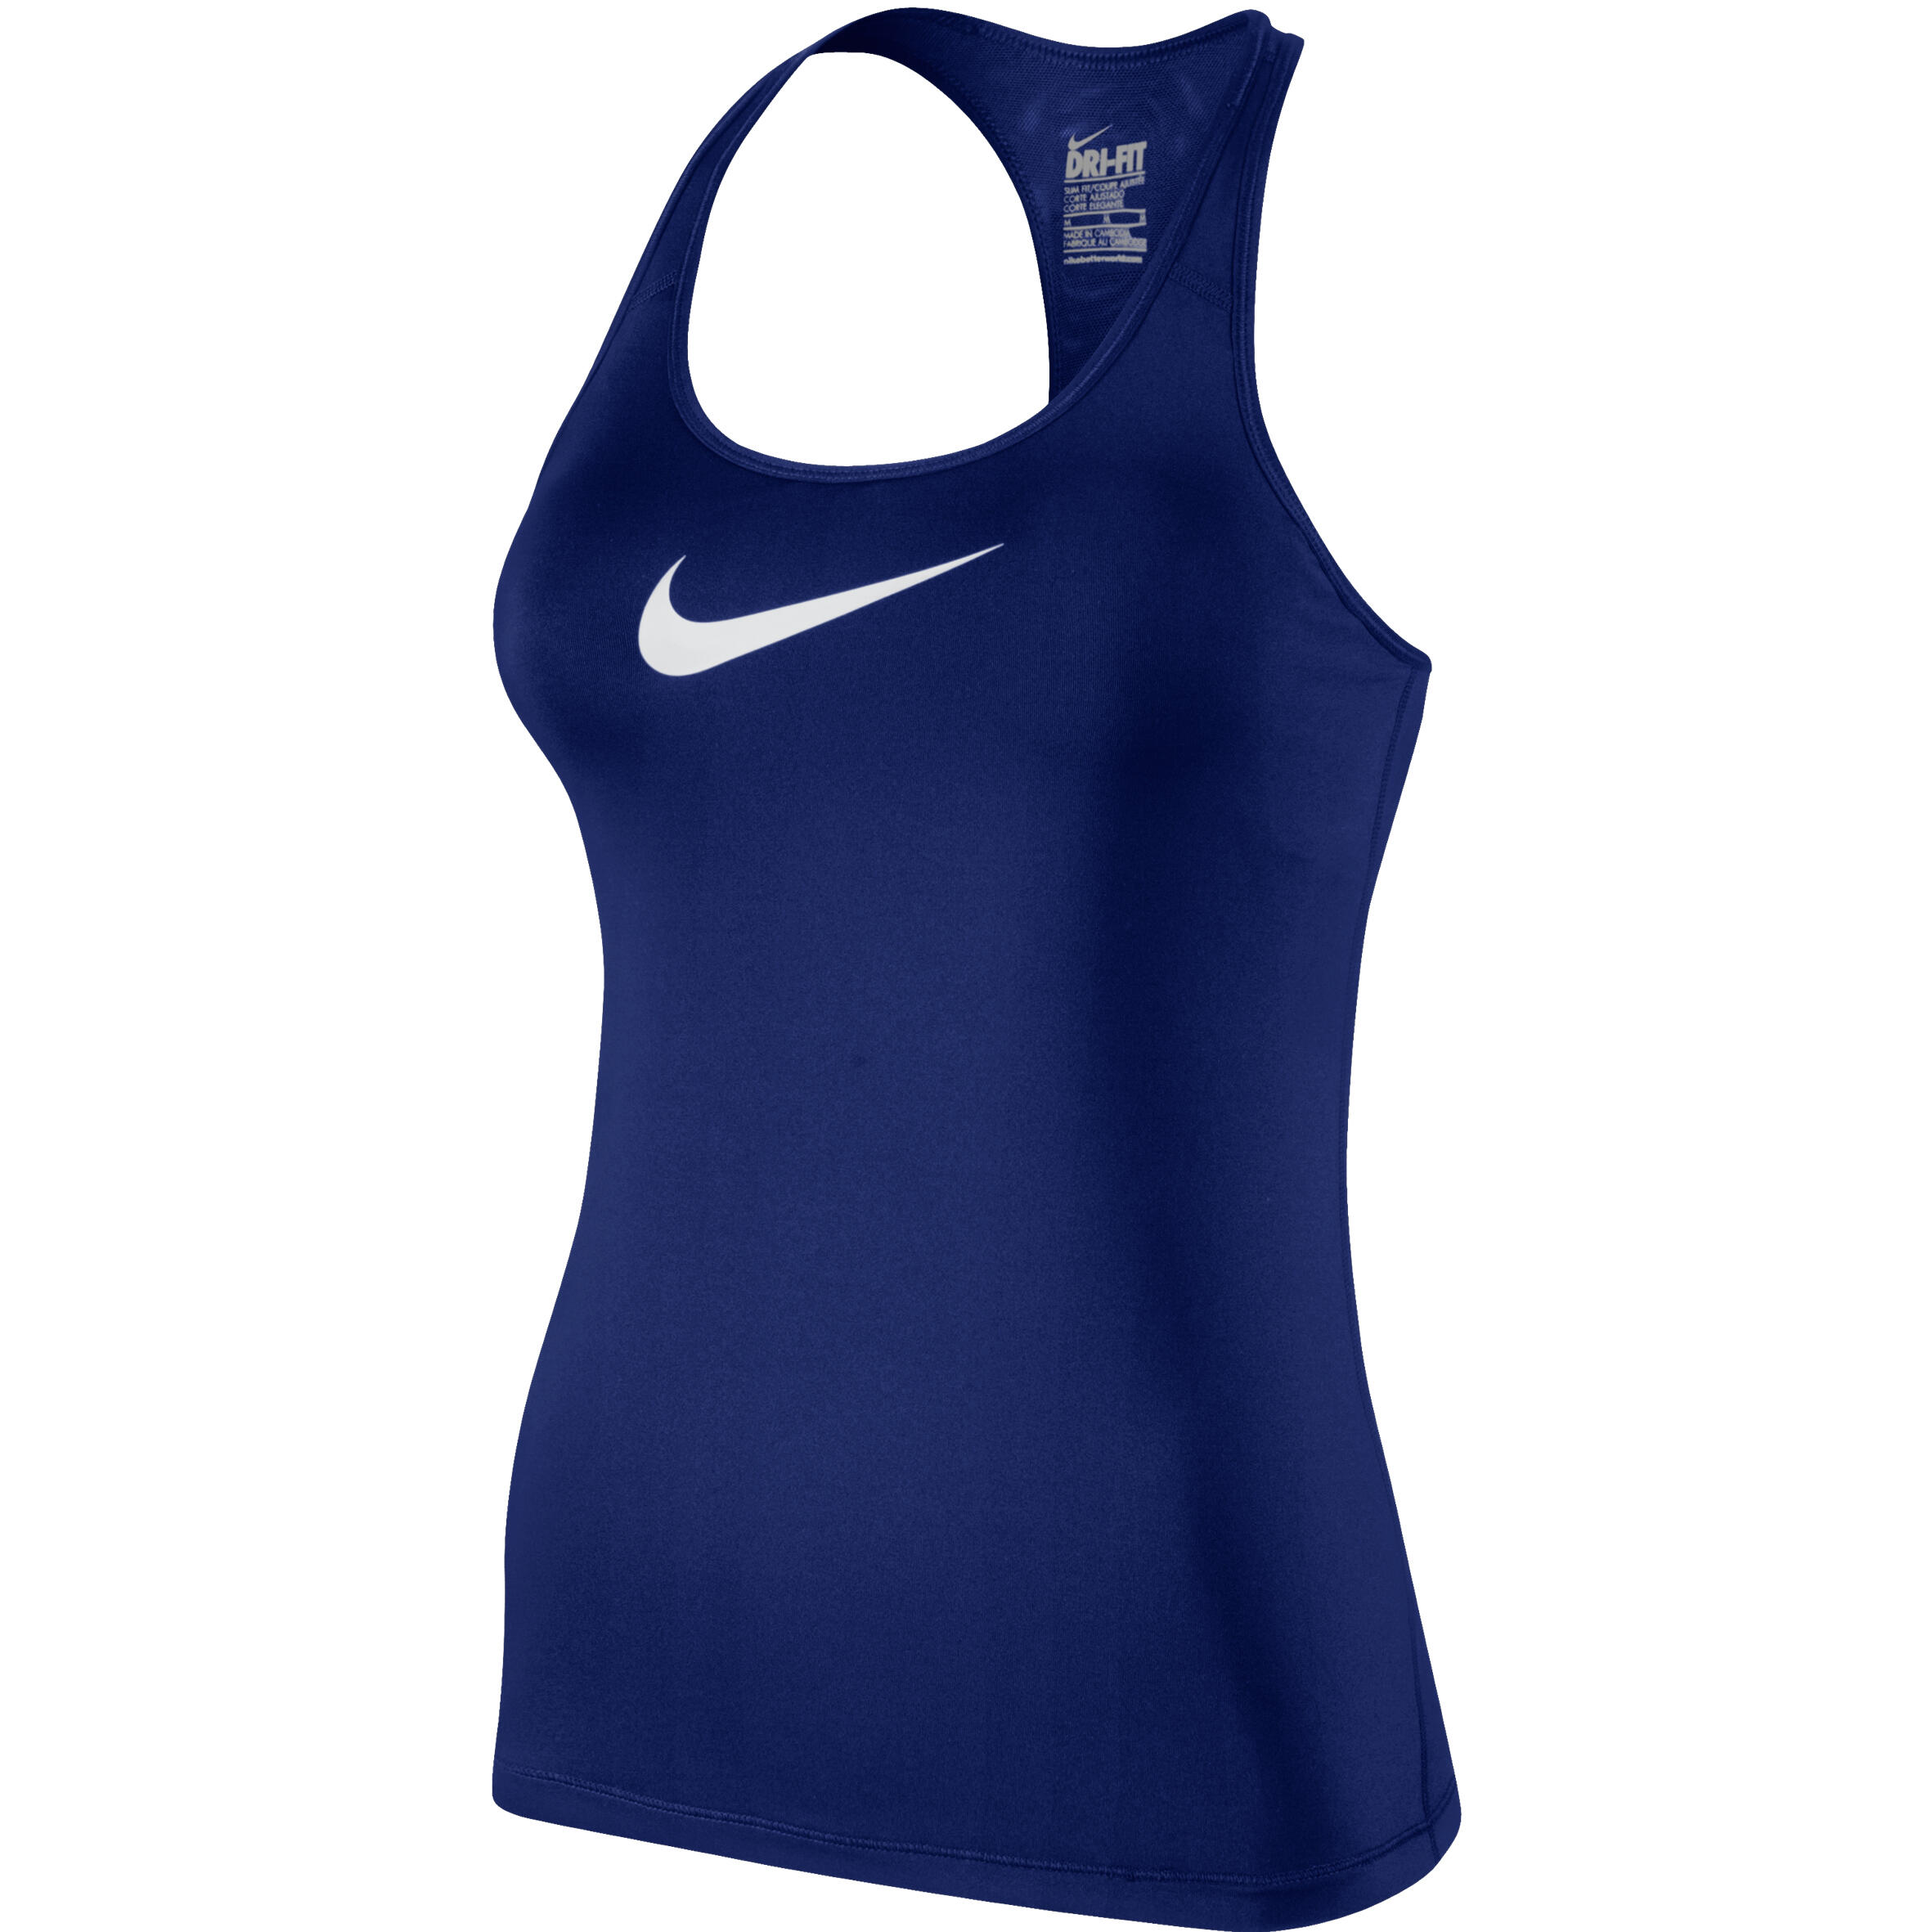 Nike Women's Fitness Tank Top With Sports Bra - Blue